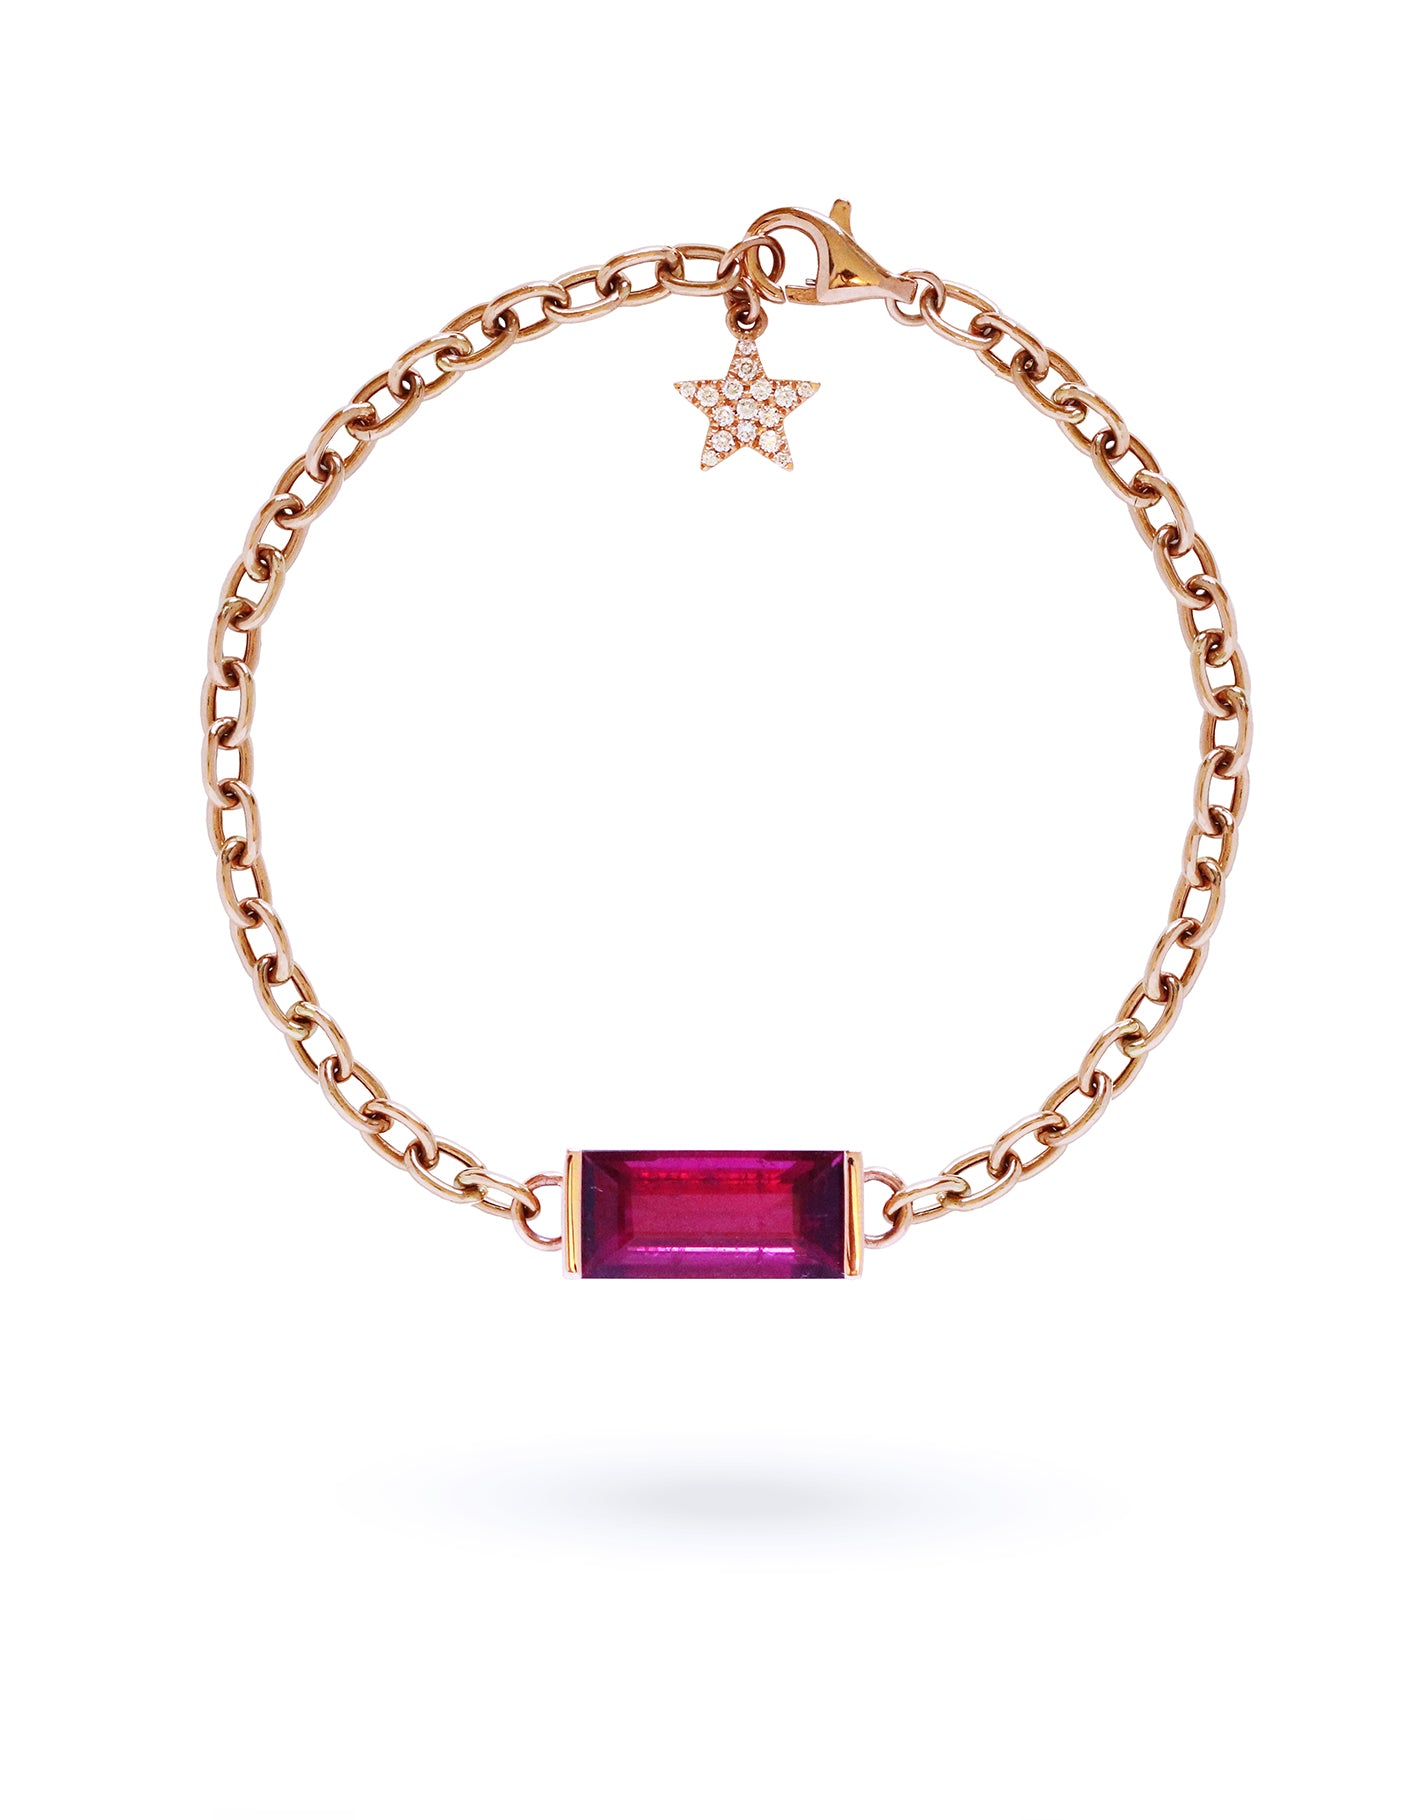 Rubellite and Diamond Star Chain Bracelet in 18K Rose Gold